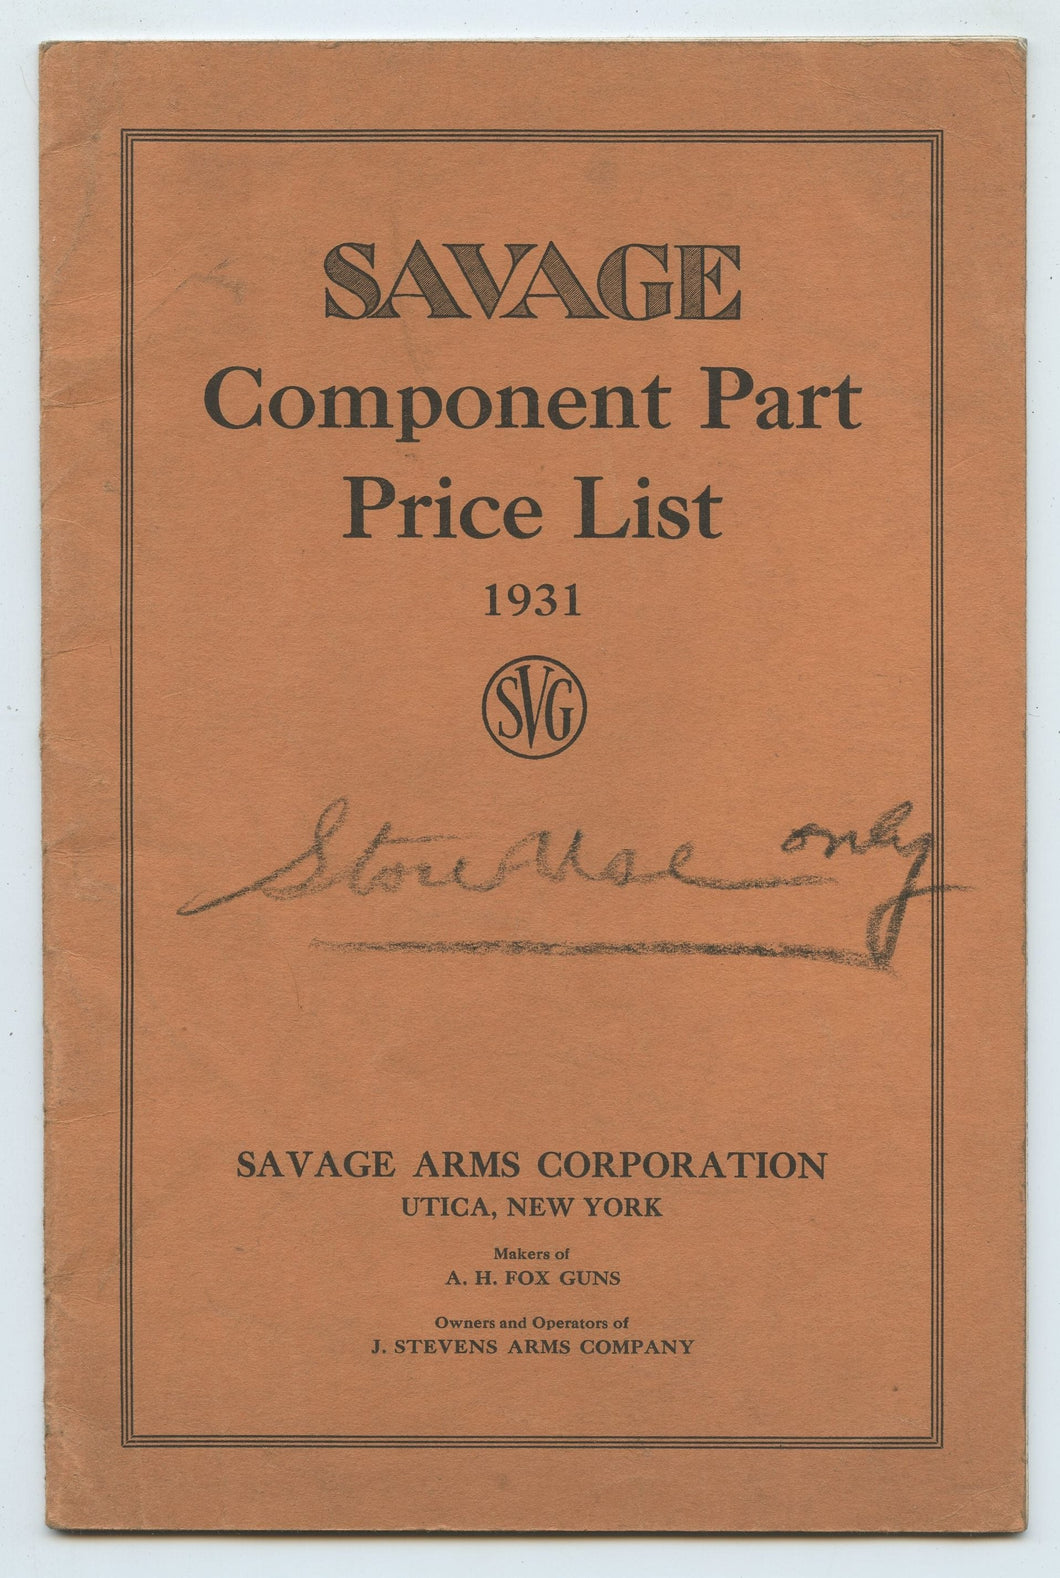 Savage Component Part Price List, 1931